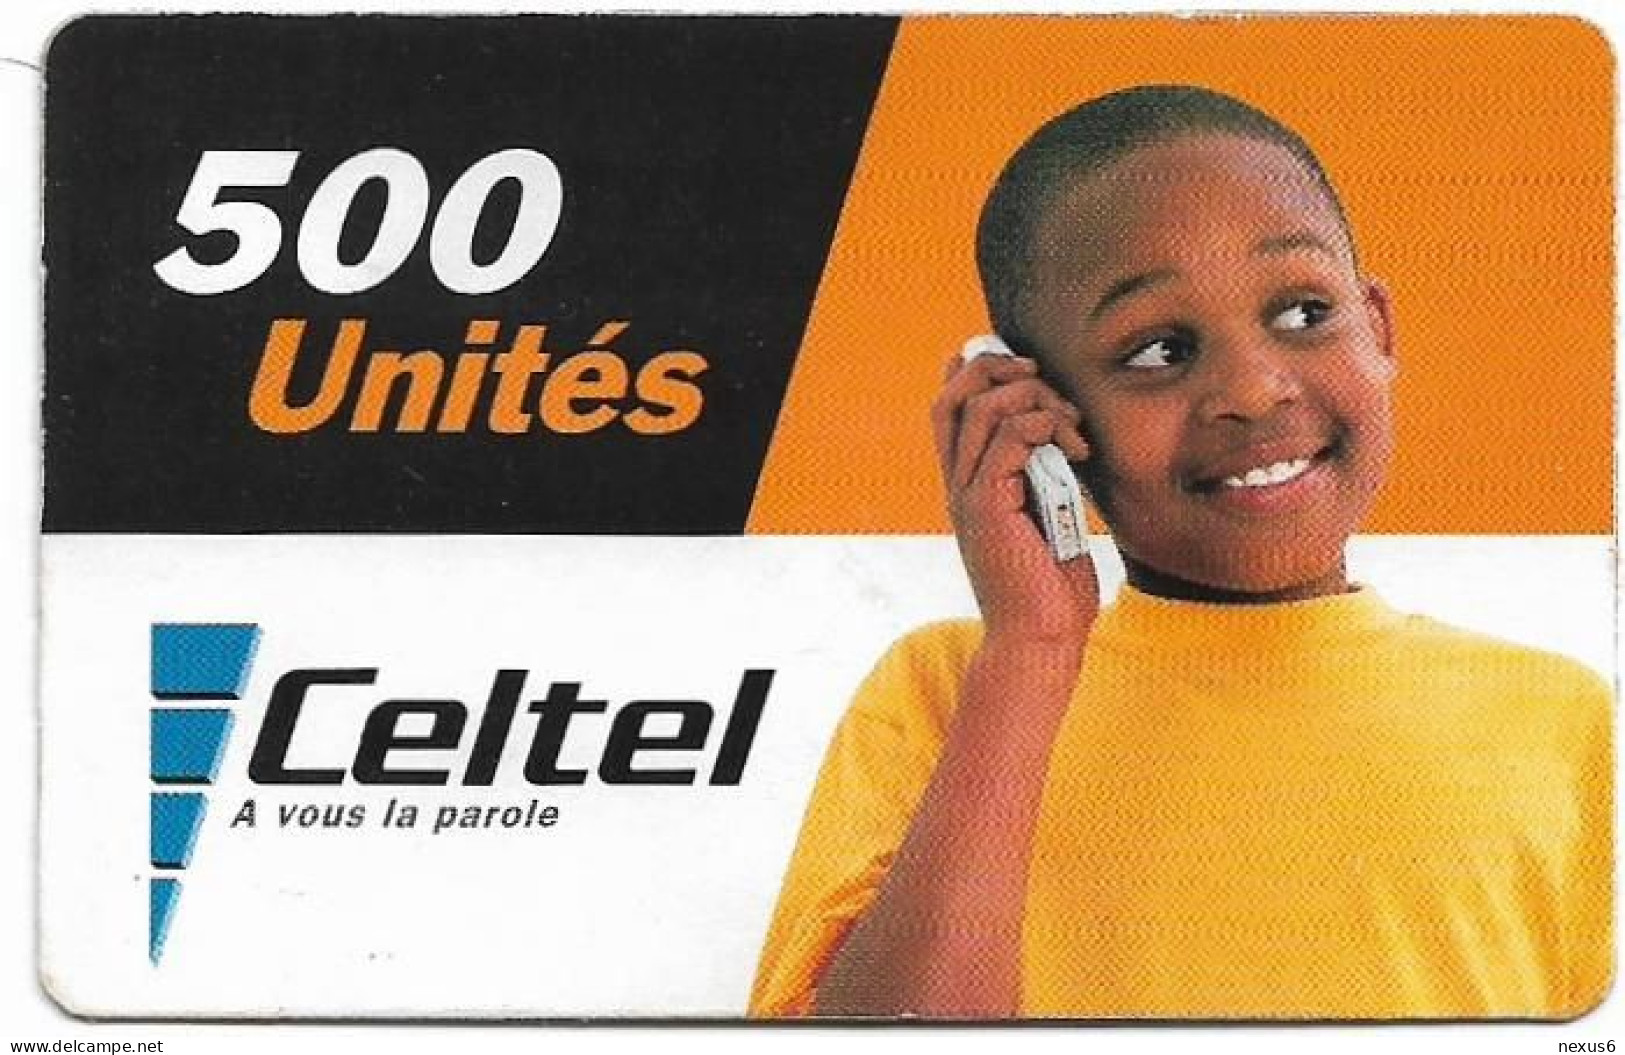 Congo Republic (Kinshasa) - Celtel - Young Boy At Phone (Reverse 1), Exp. 31.12.2004, GSM Refill 500Units, Used - Kongo